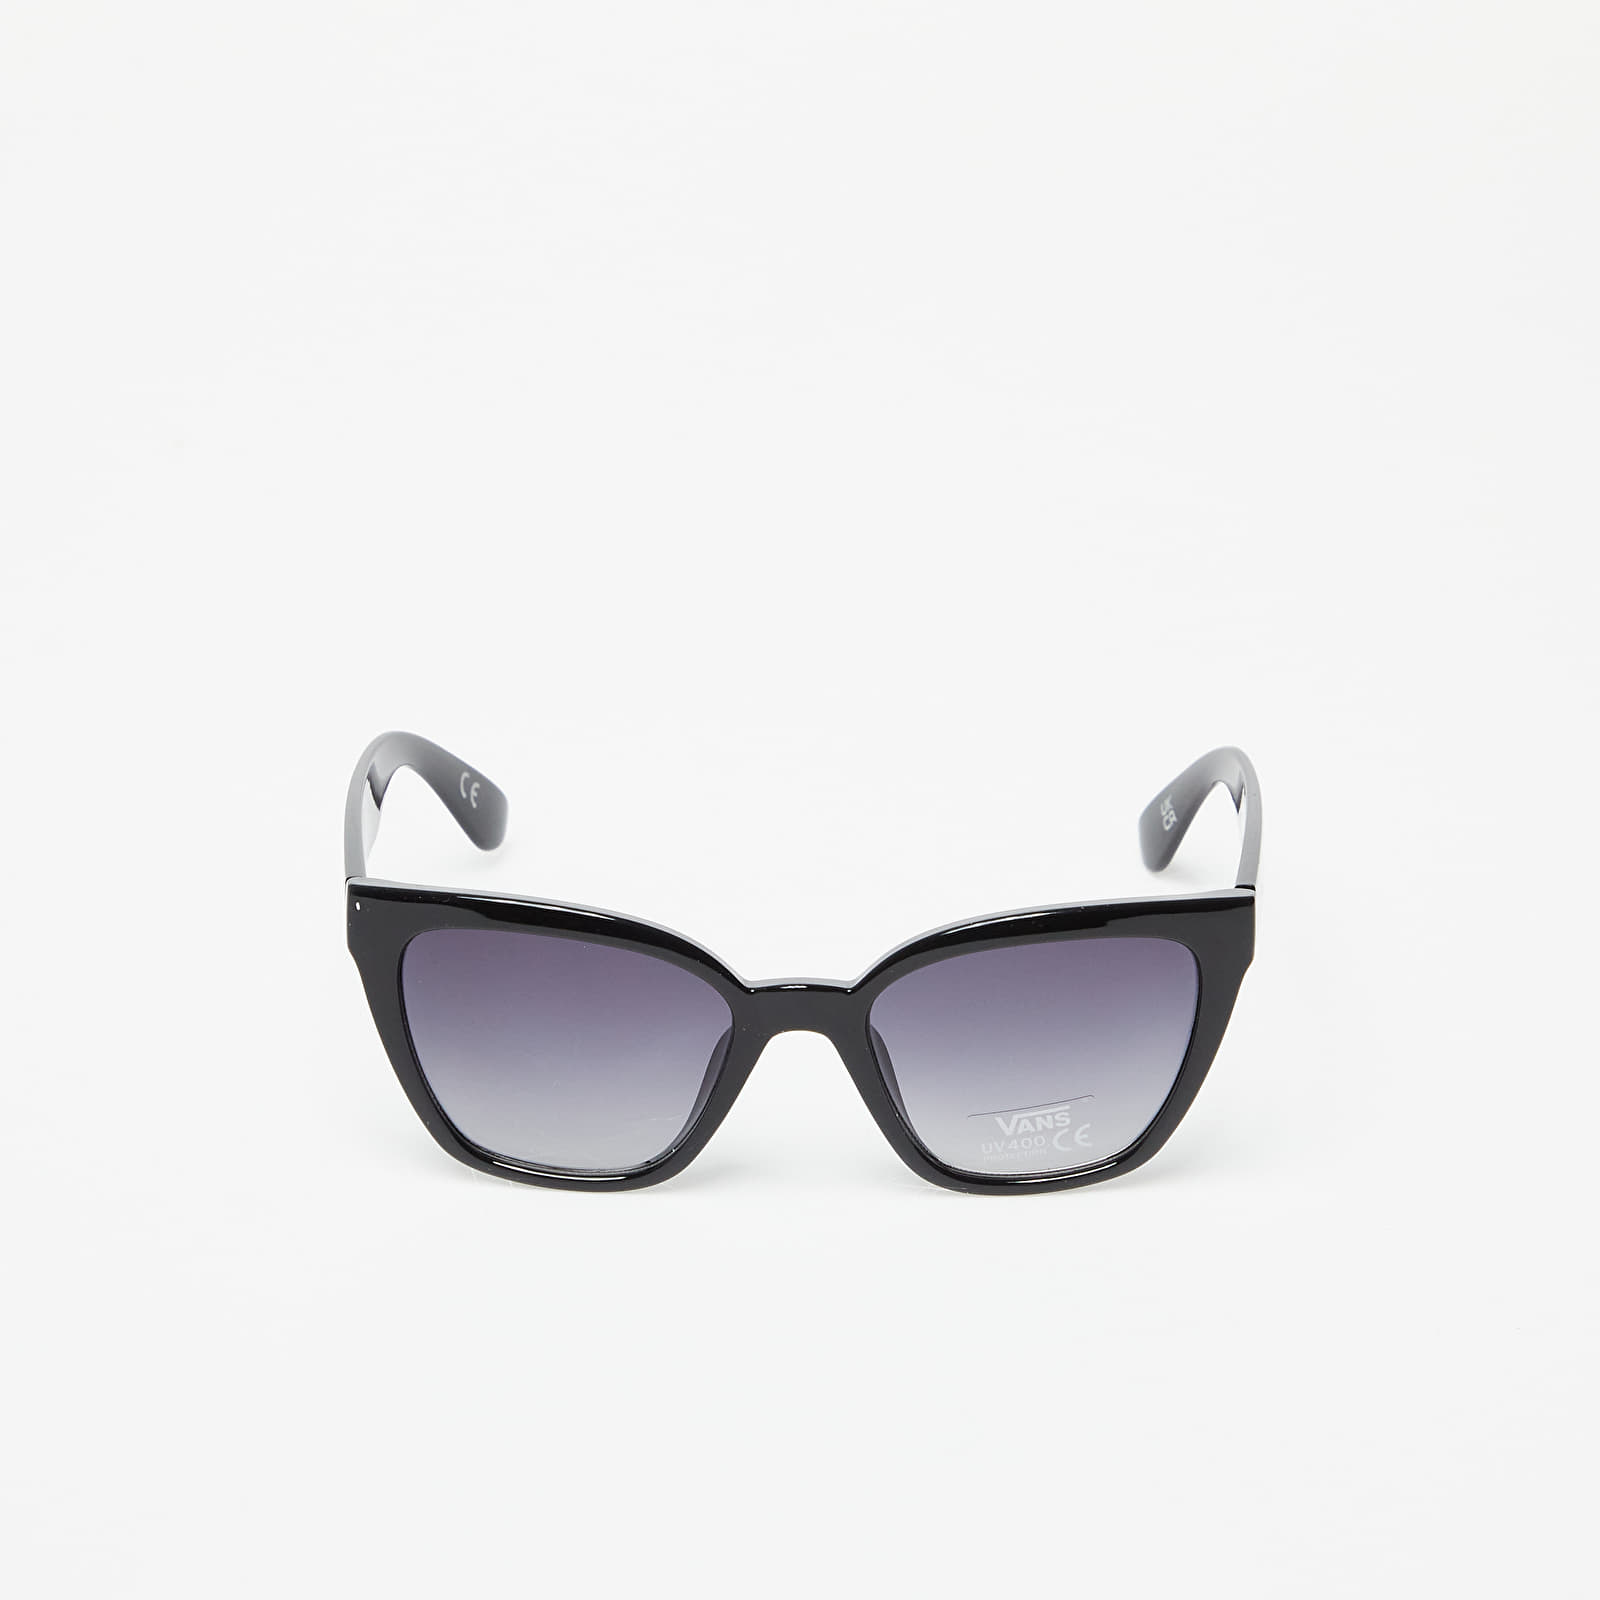 Sunglasses Vans WM Hip Cat Sunglasses Black